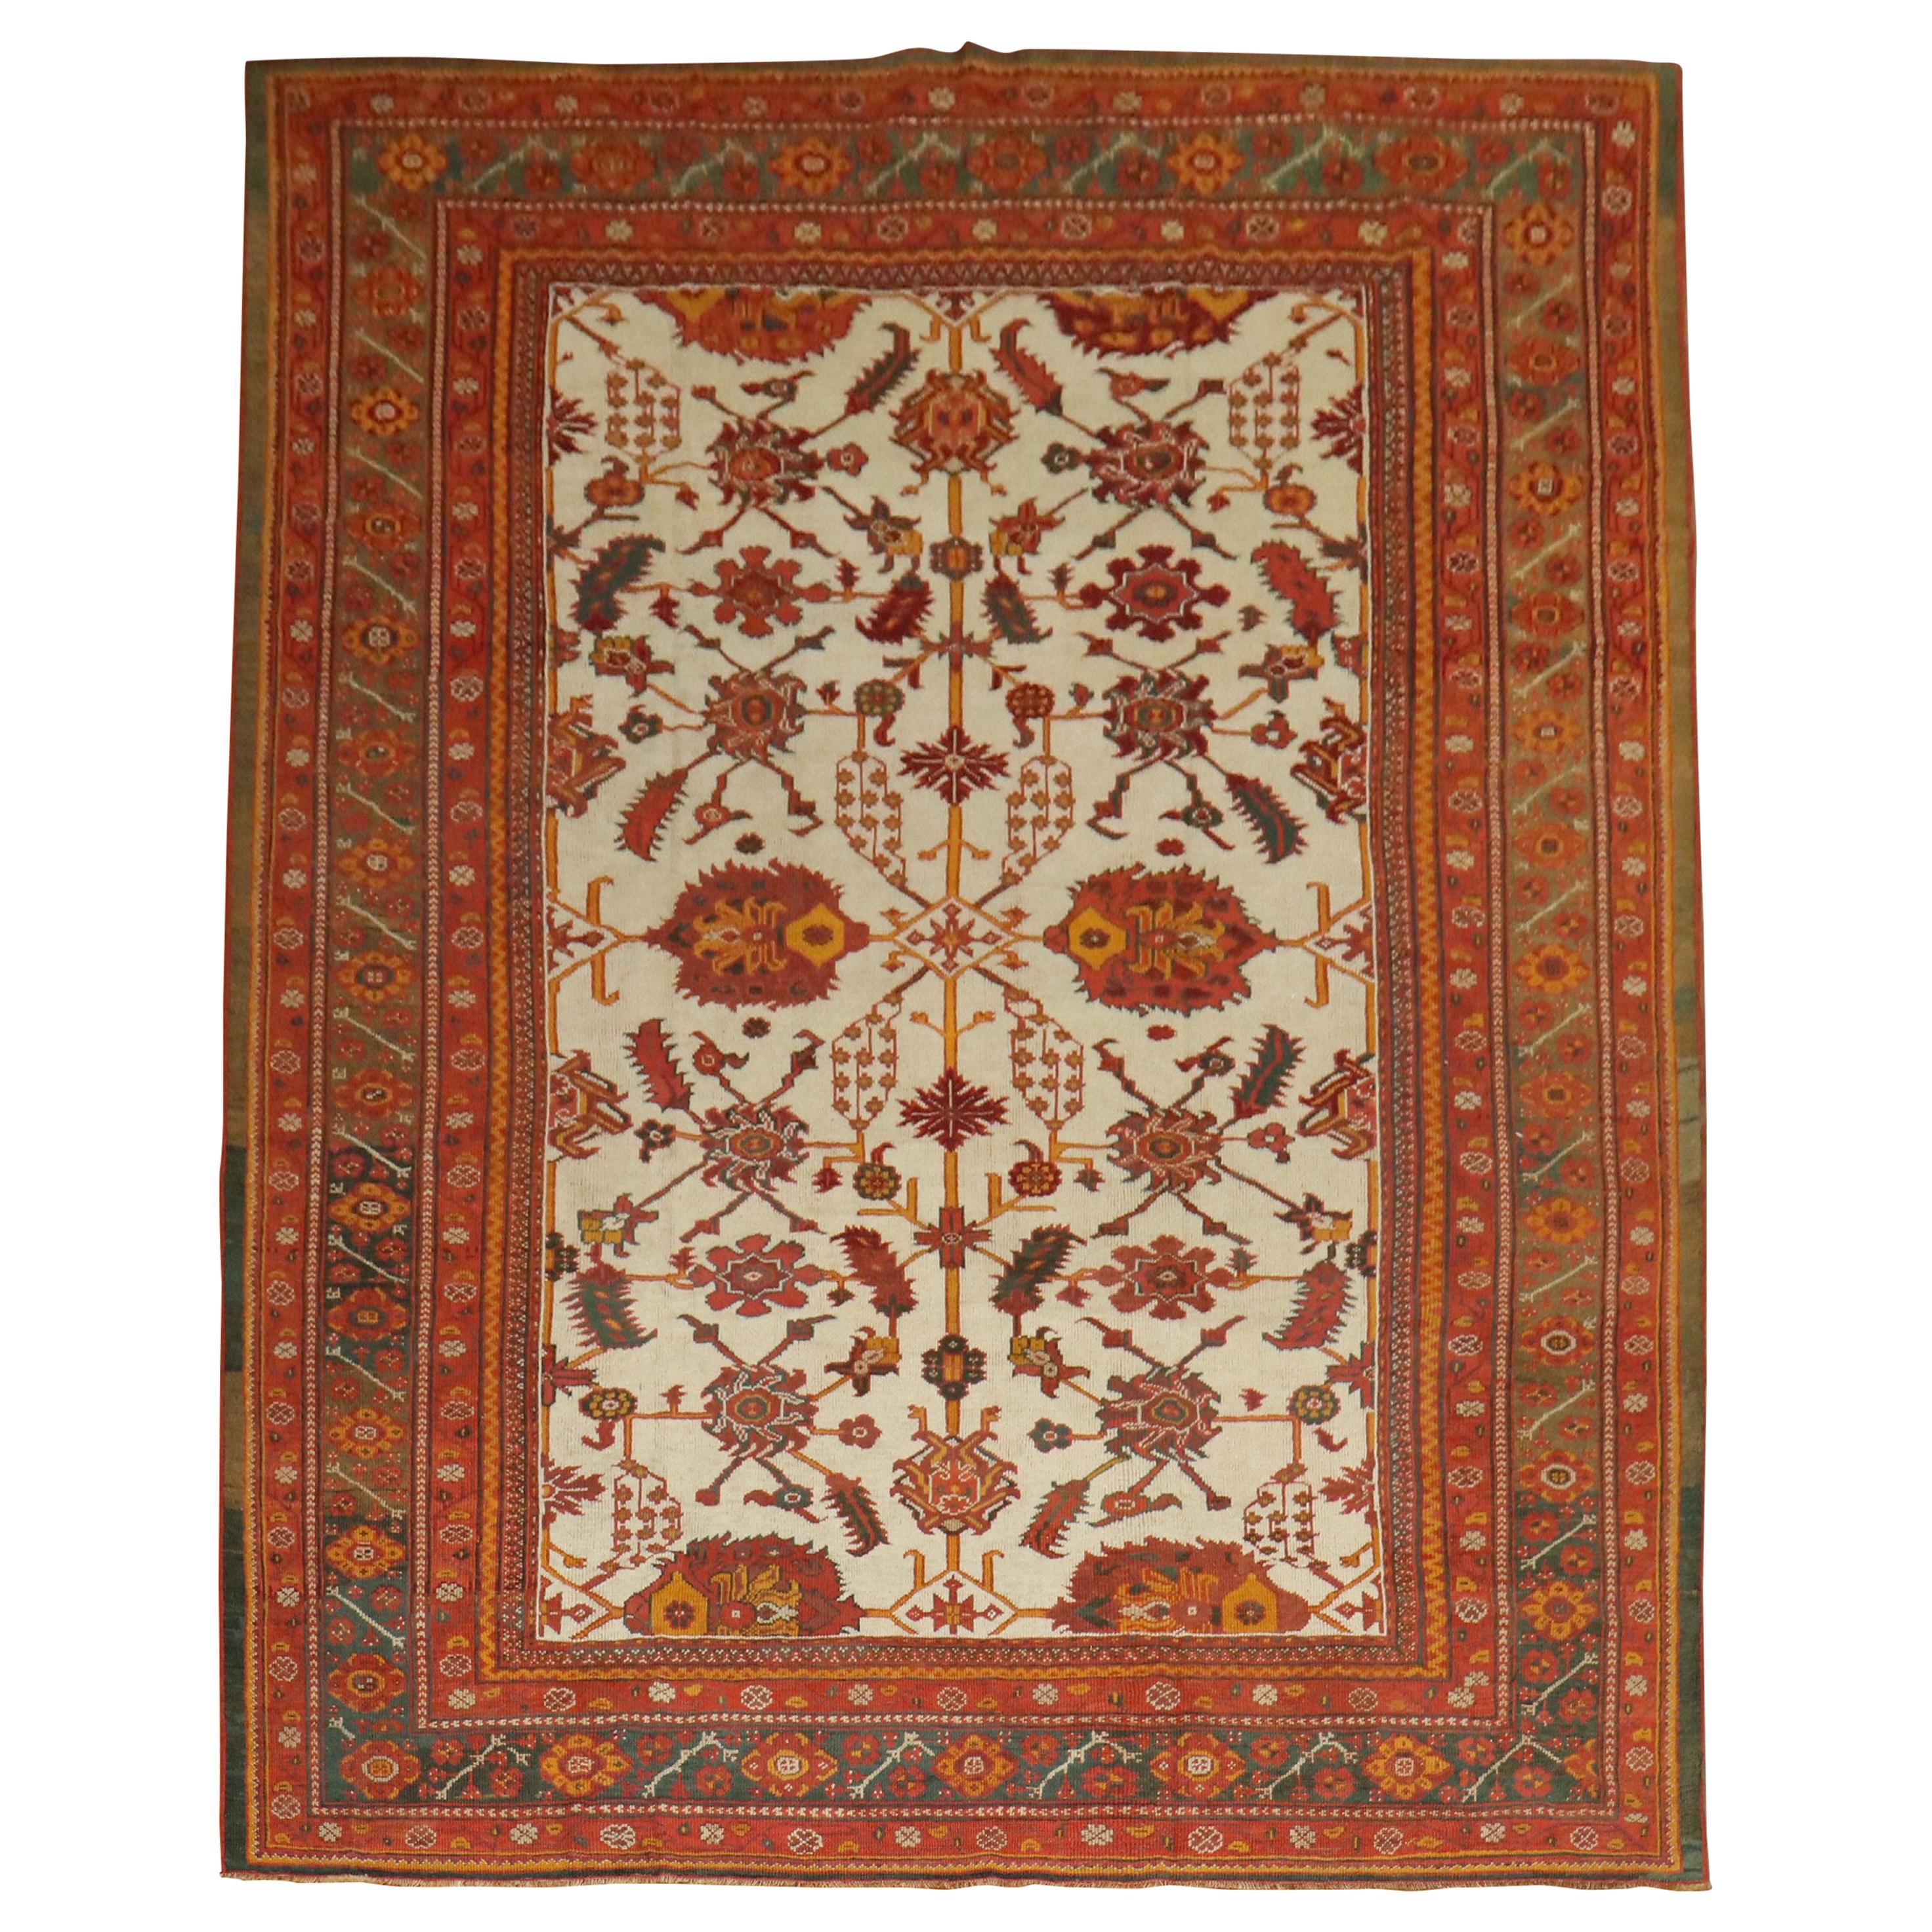 Ivory Field Antique Turkish Oushak Carpet, Late 19th Century